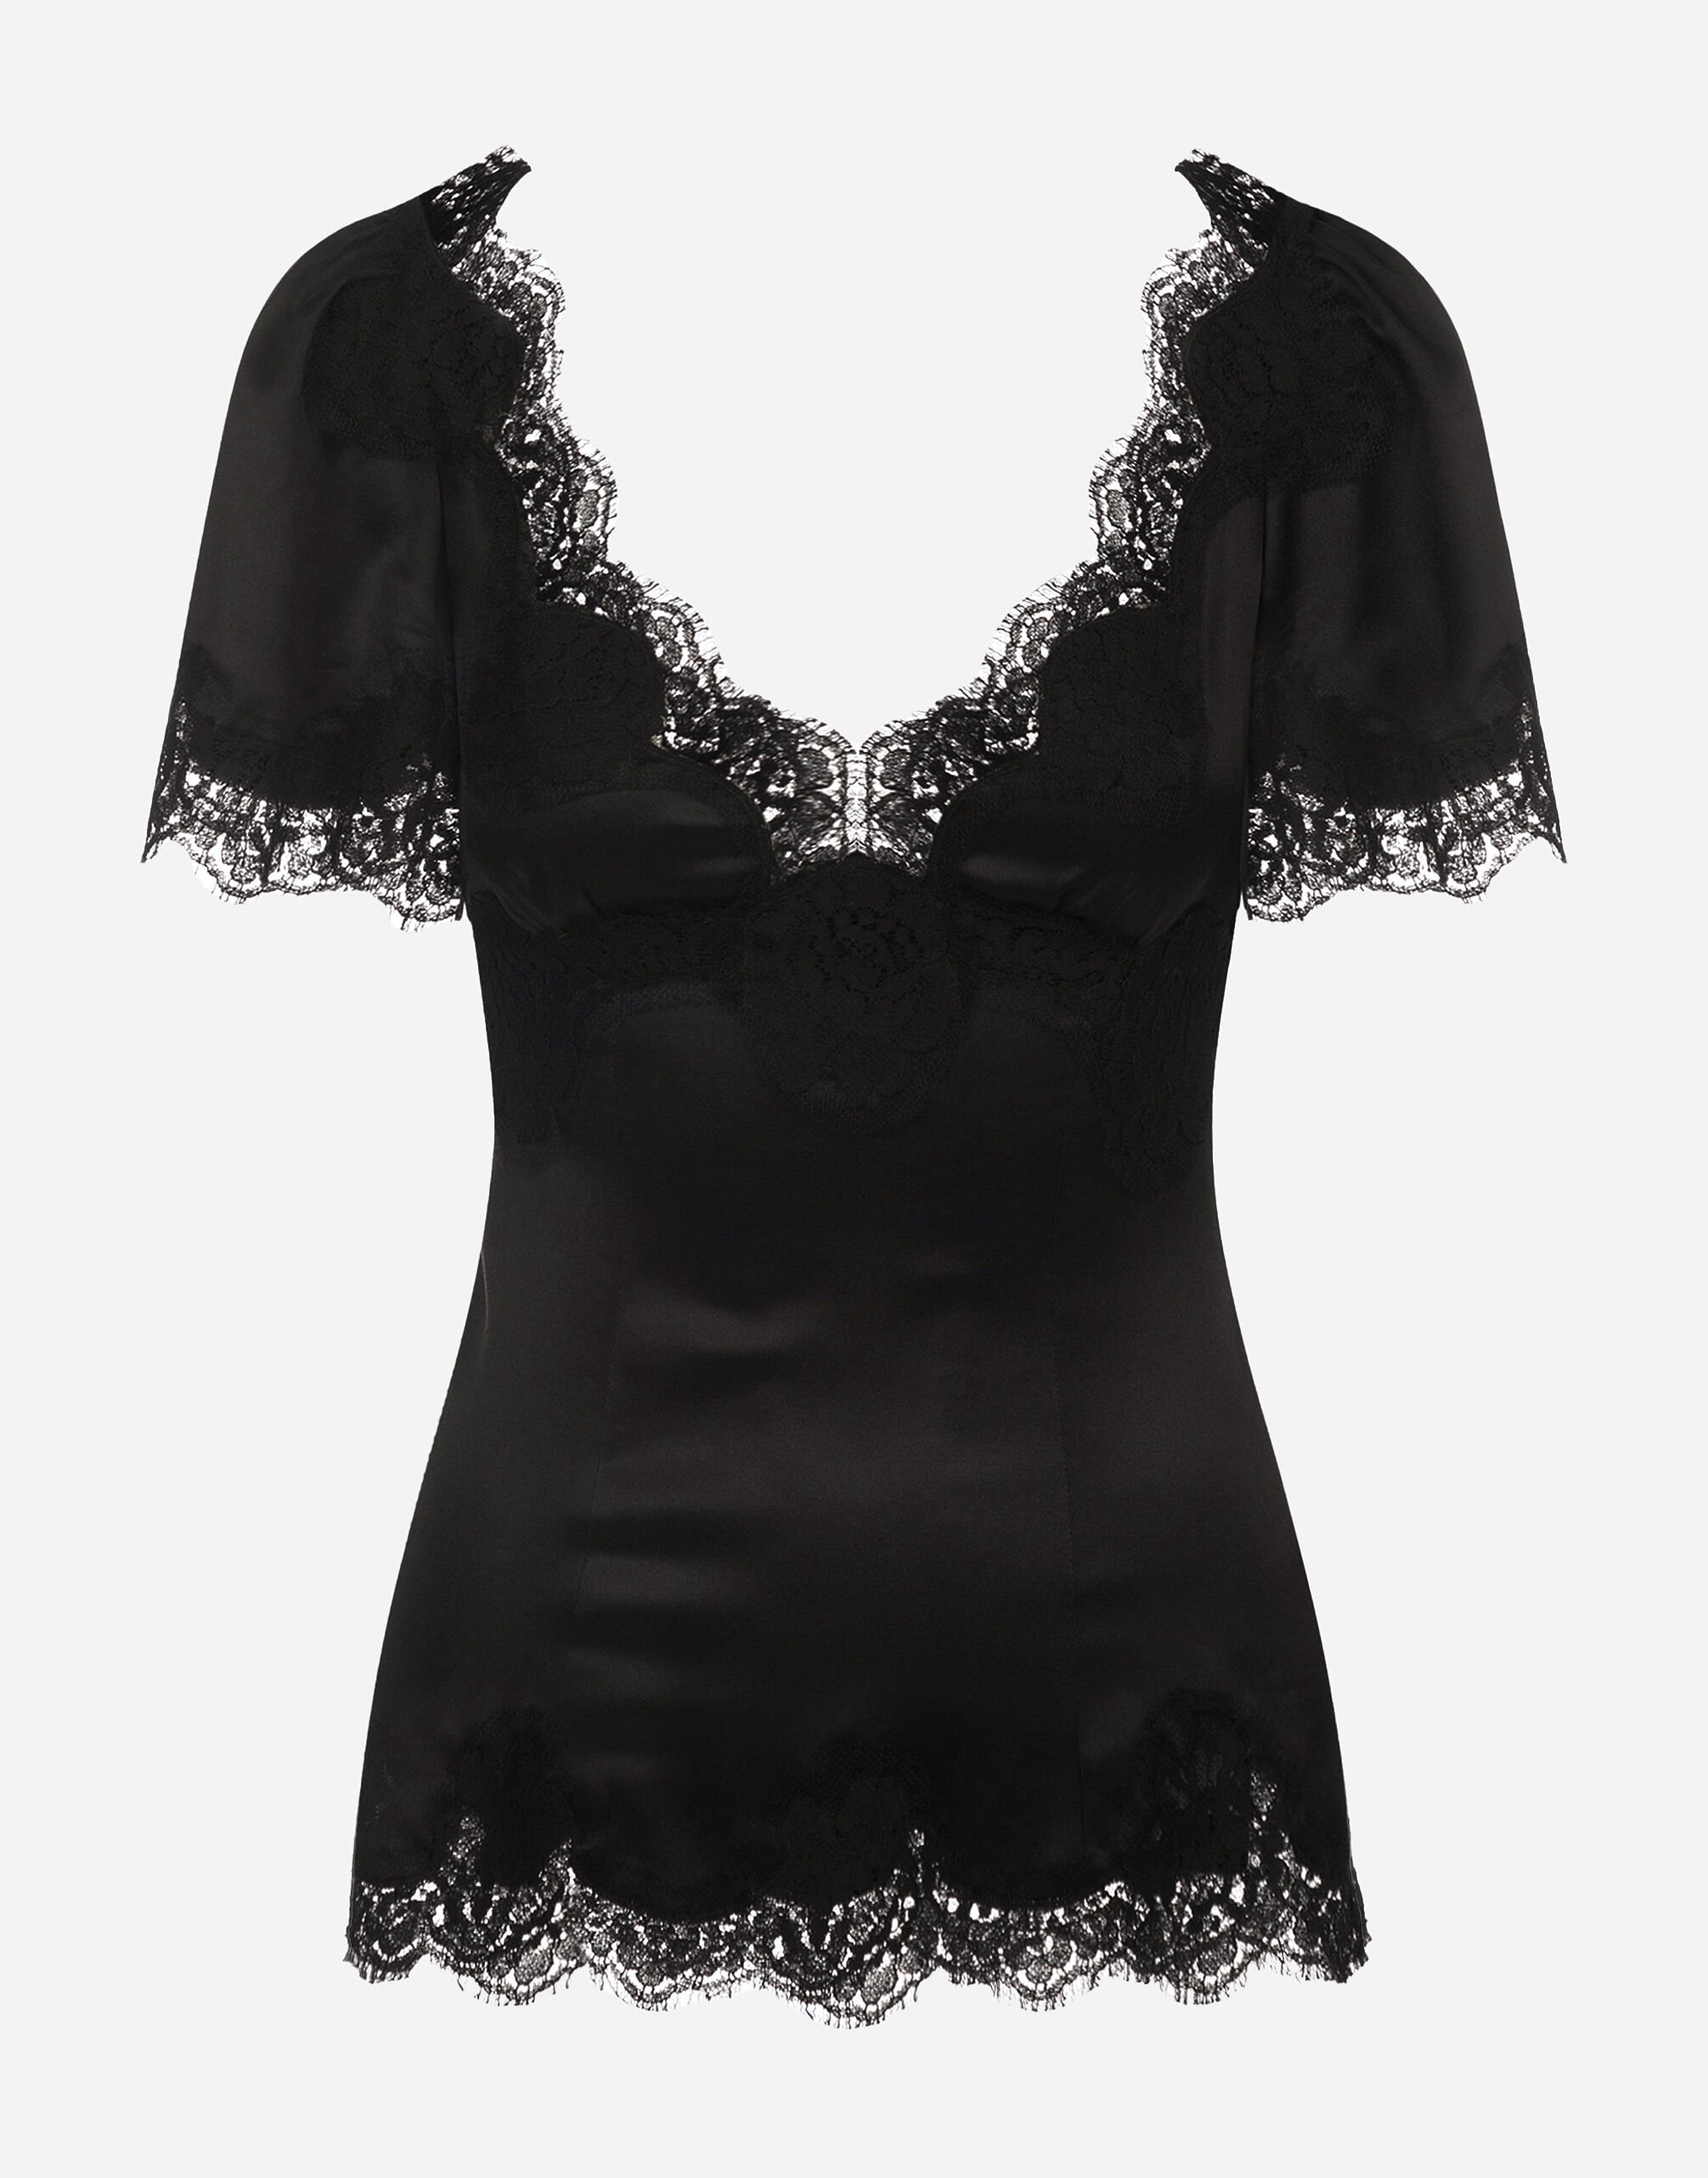 Dolce & Gabbana Satin top with lace details Black F4BSQTFLM8X